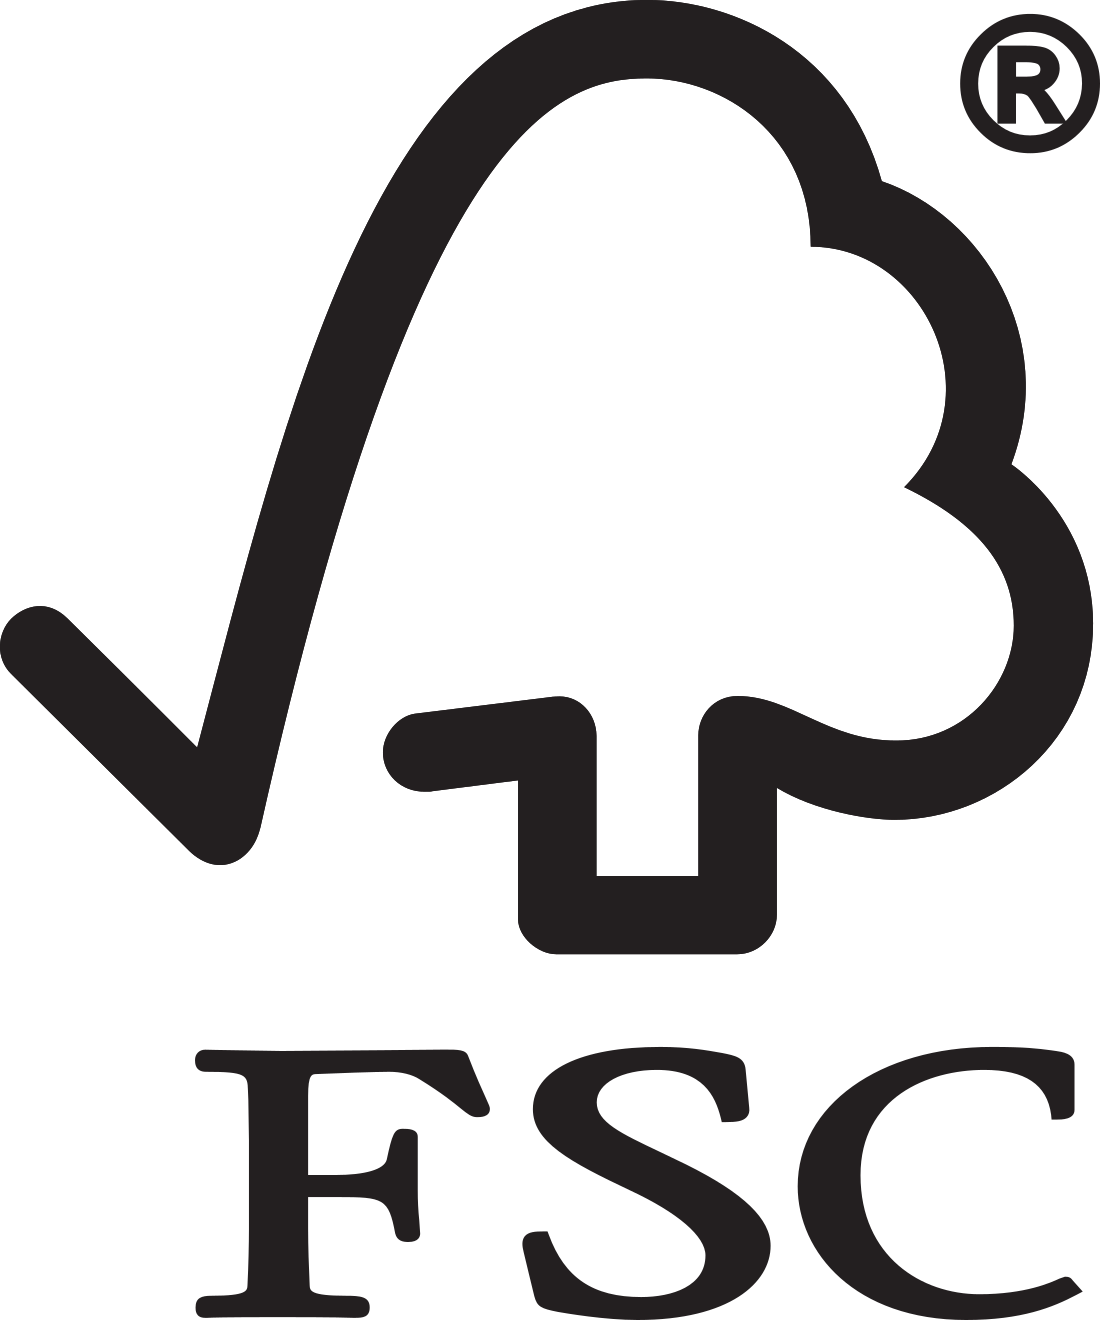 fsc-logo-4 – PNG e Vetor - Download de Logo